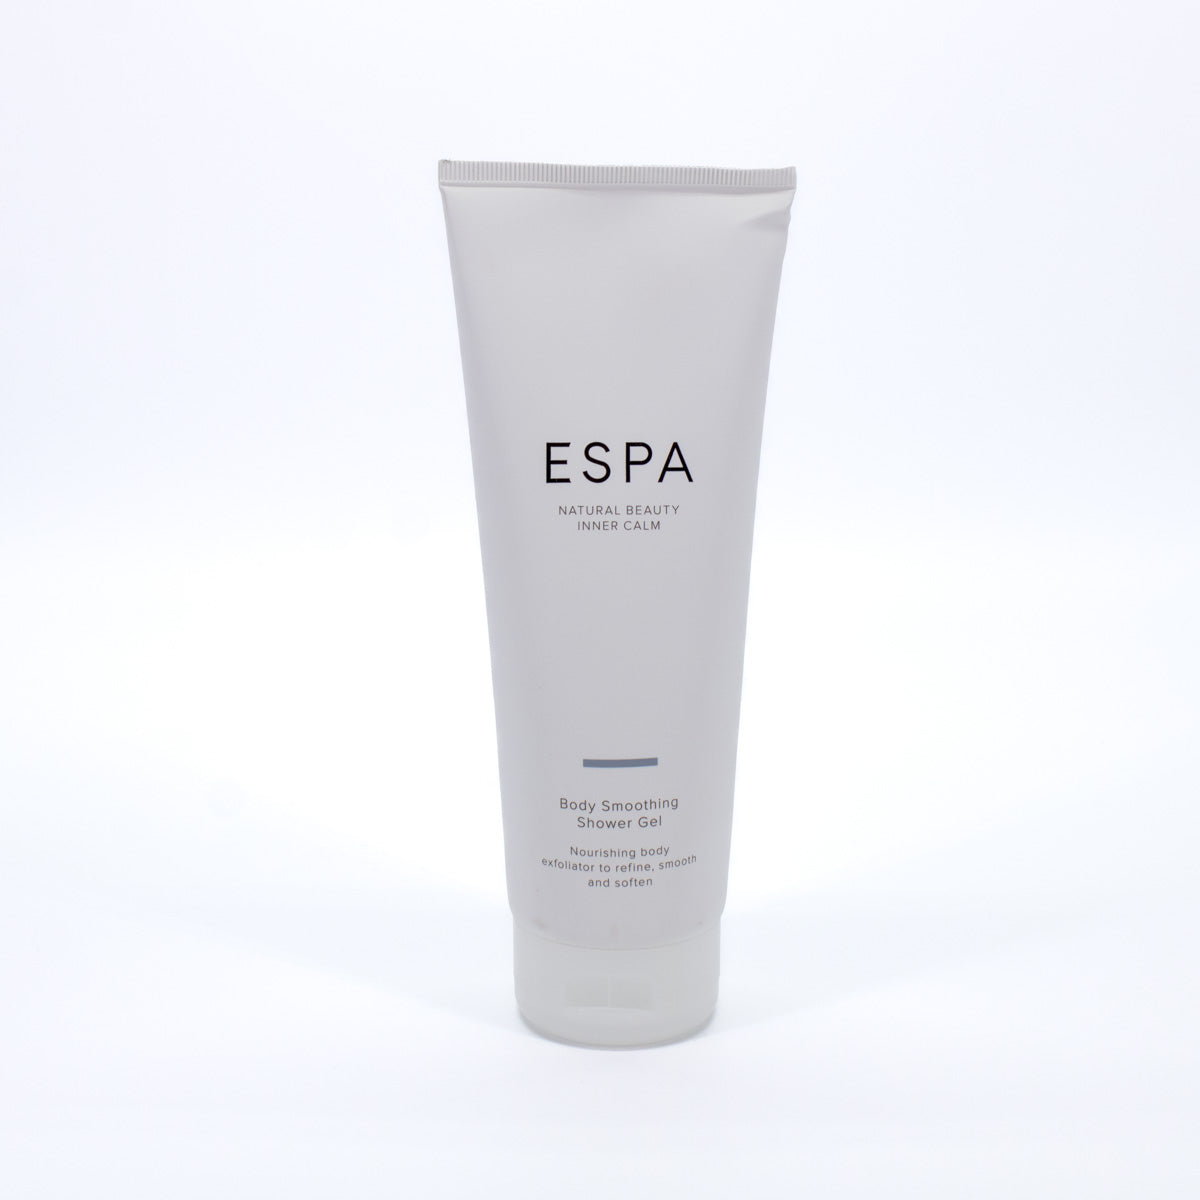 ESPA Body Smoothing Shower Gel 6.7oz - Imperfect Box